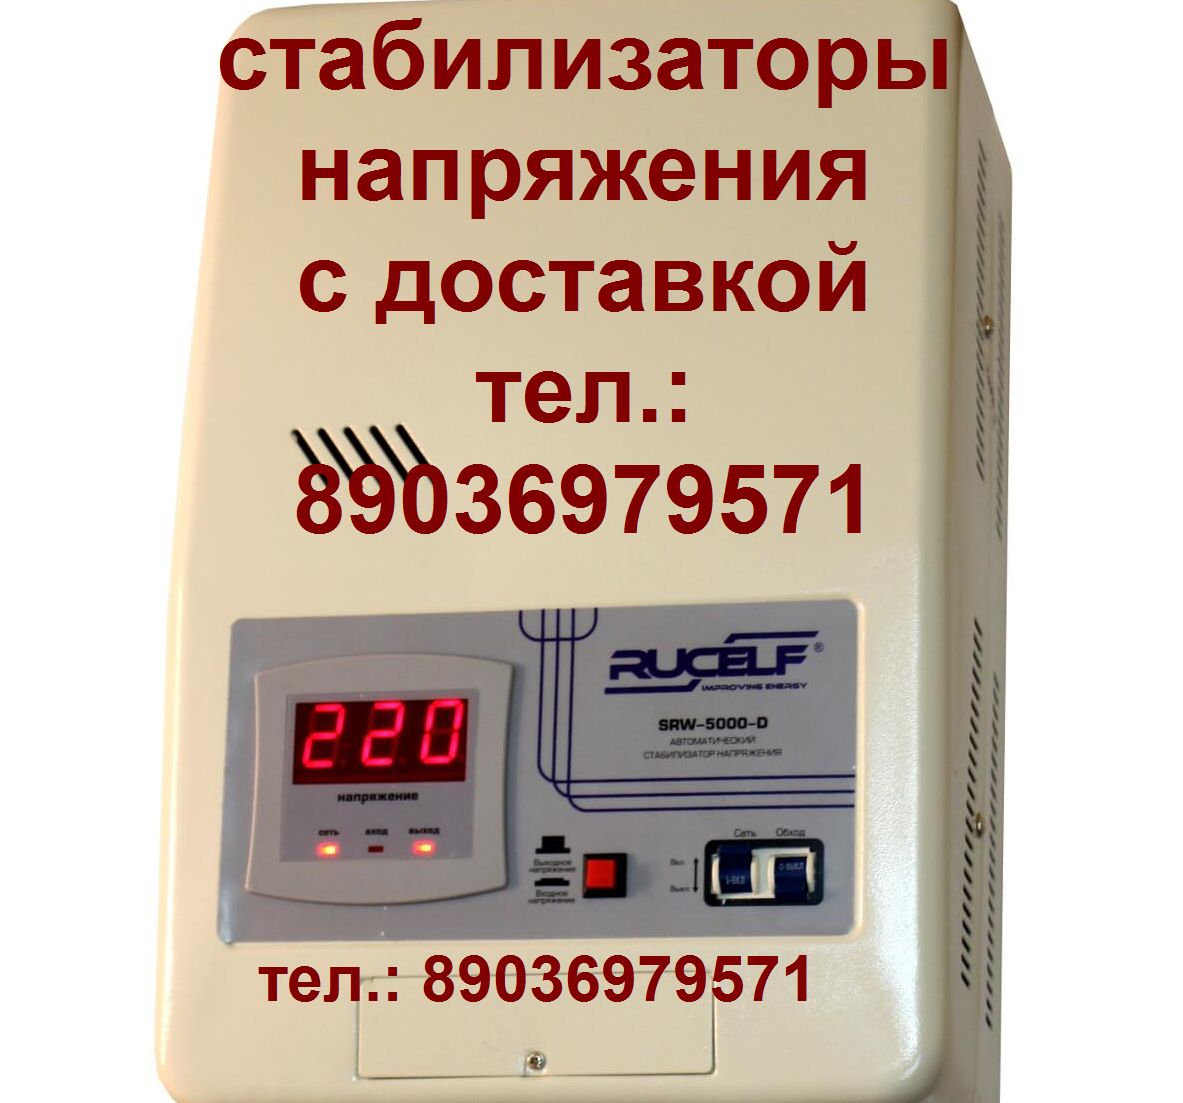 пассики для sharp vz-3000 vz-3500 rp-10 rp-113 rp-101 rp-25 rp-11 rp23 пассики для sharp vz-3000 vz-3500 rp-10 rp-113 rp-101 rp-25 rp-11 rp23 в городе Москва, фото 2, телефон продавца: +7 (903) 697-95-71